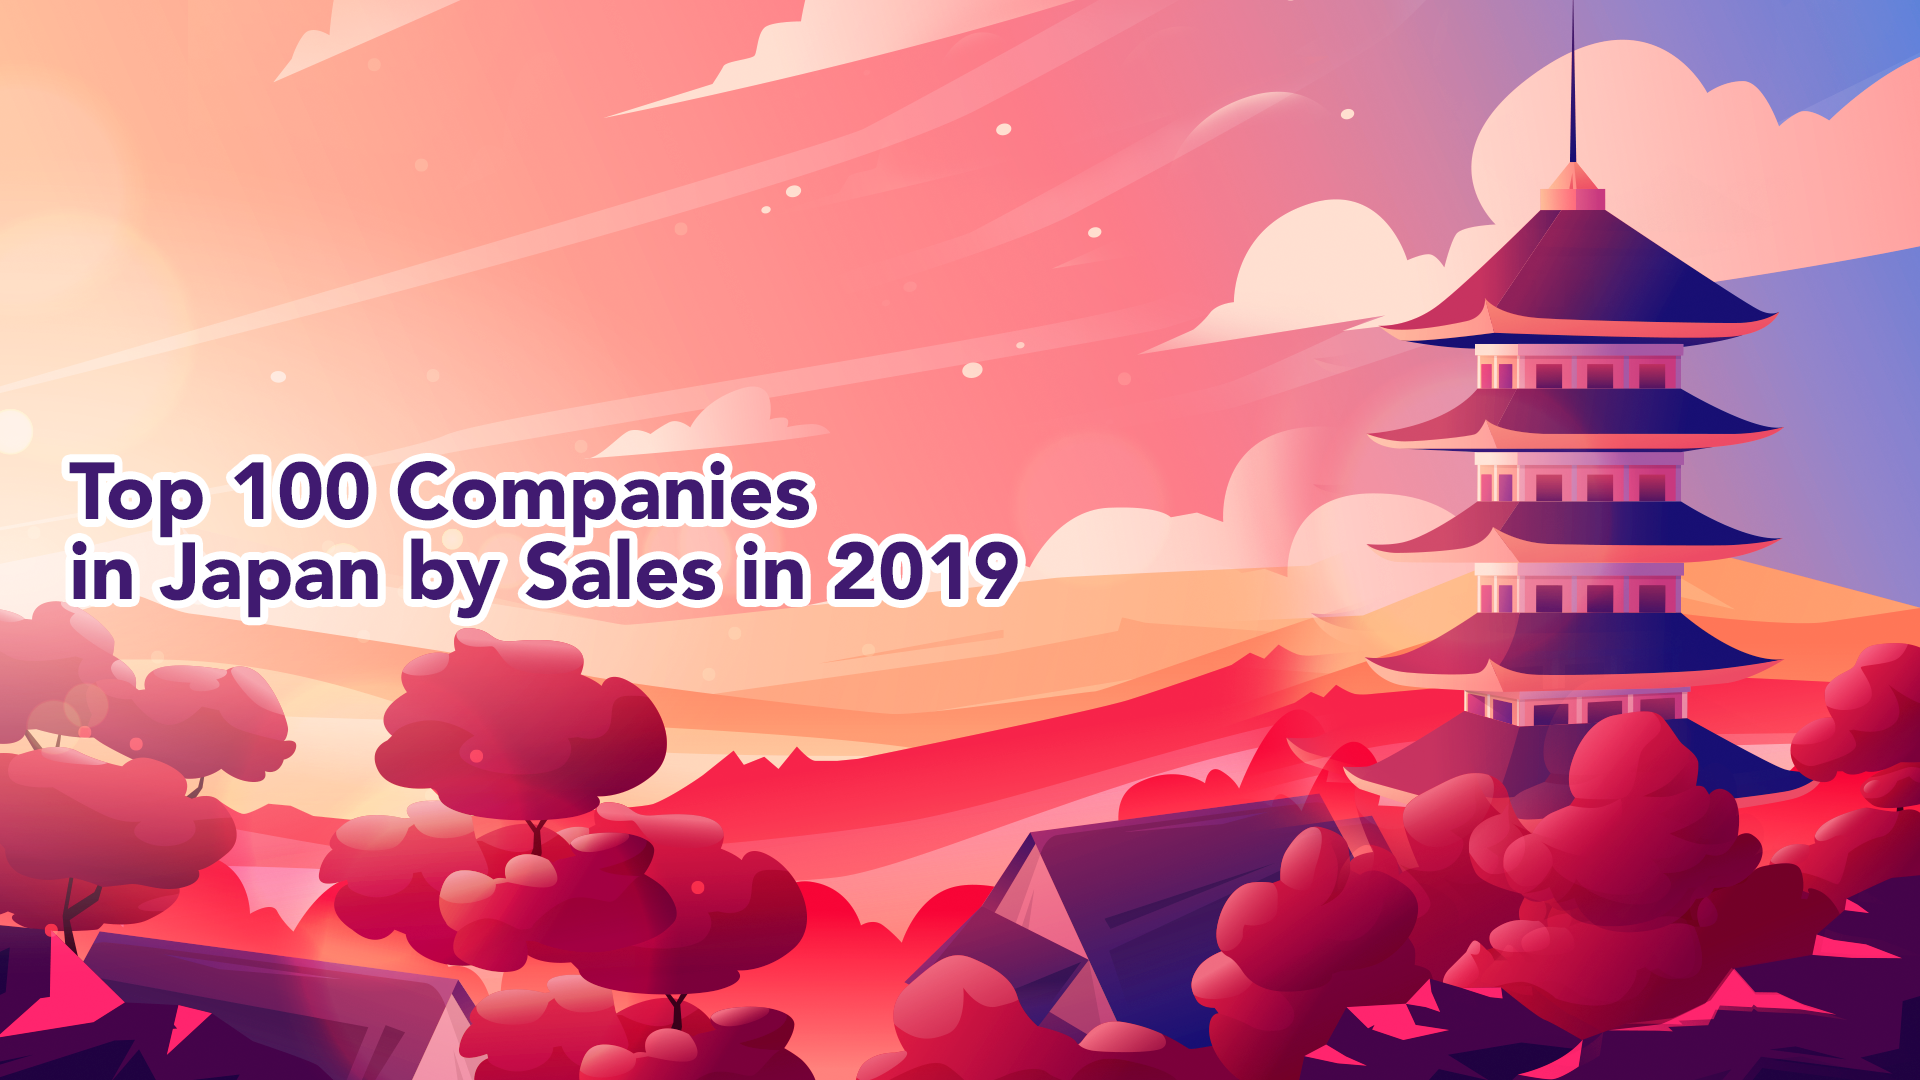 Top 100 Companies in Japan by Sales in 2019